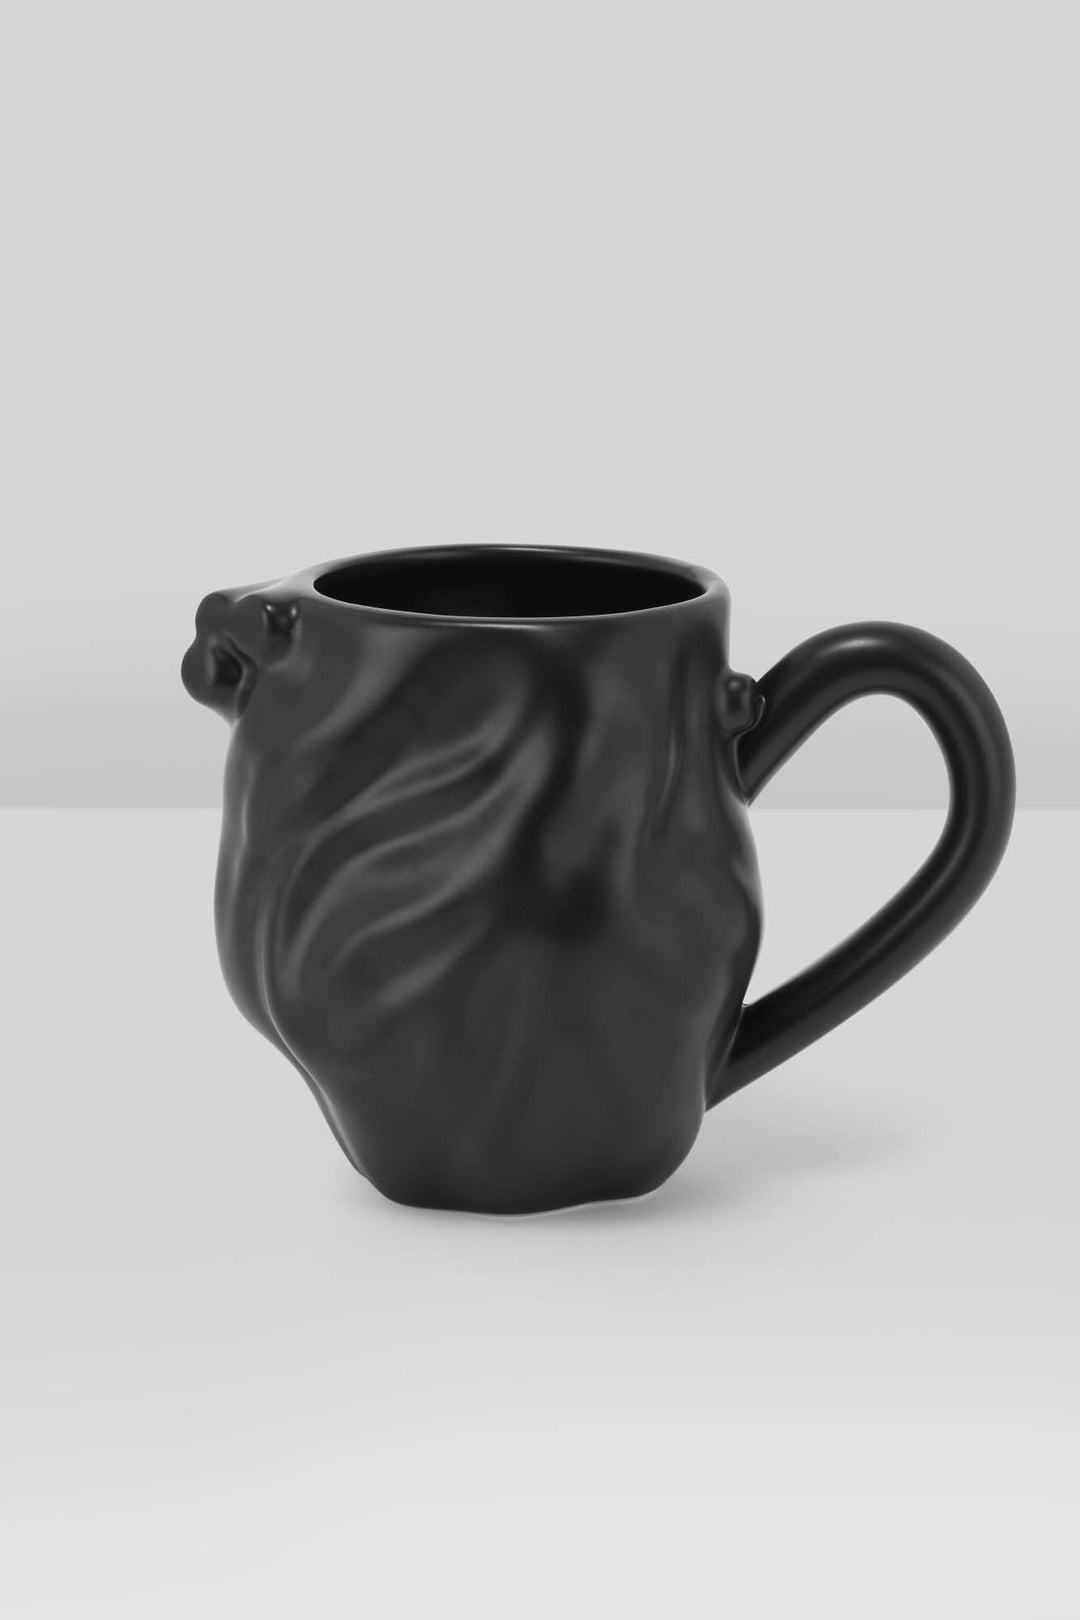 creepy black coffee cup